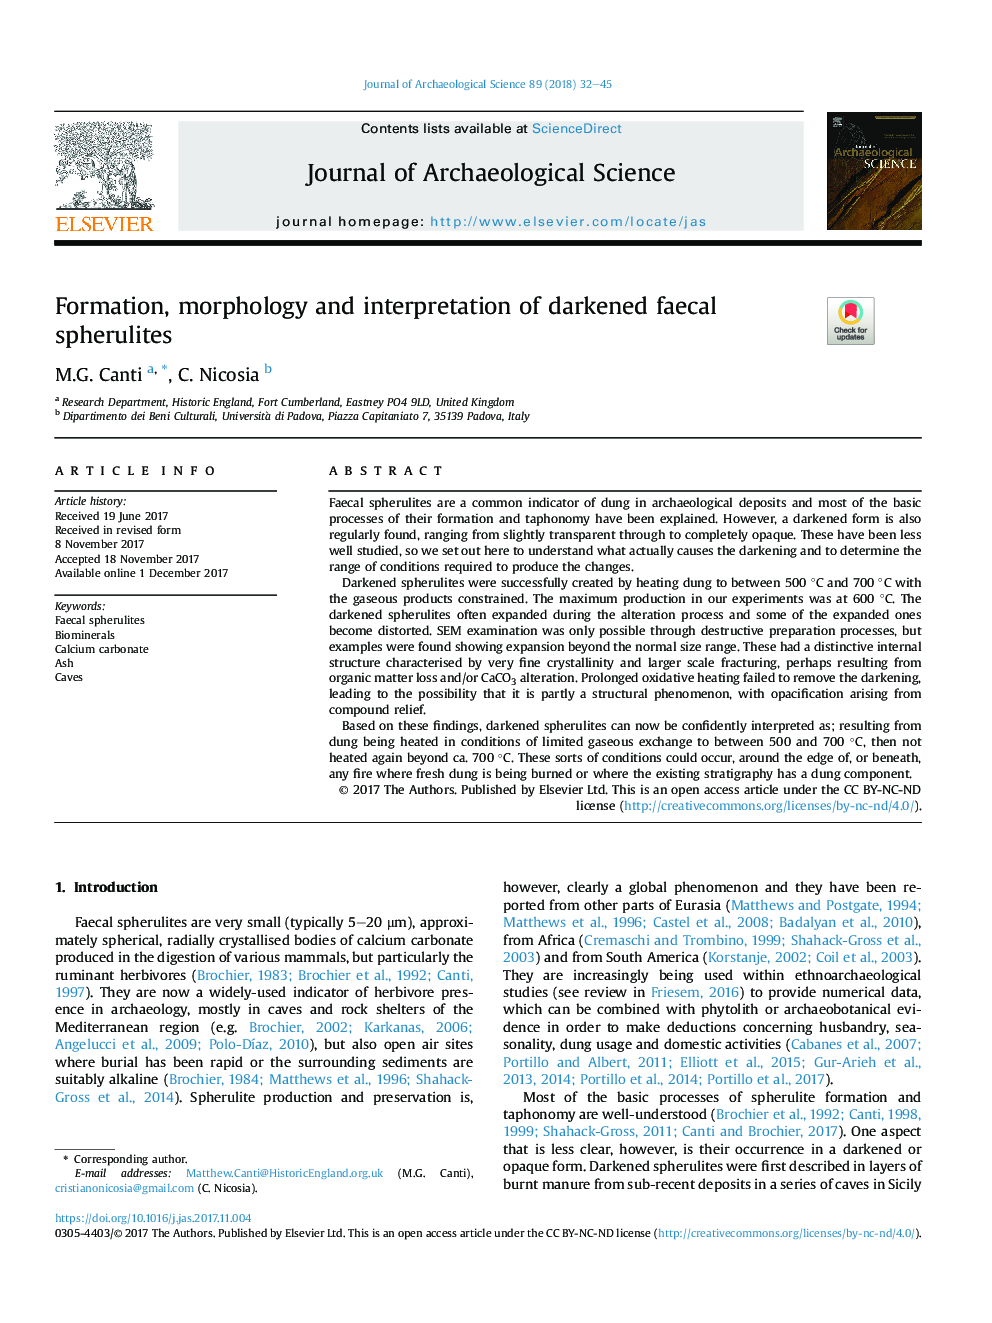 Formation, morphology and interpretation of darkened faecal spherulites